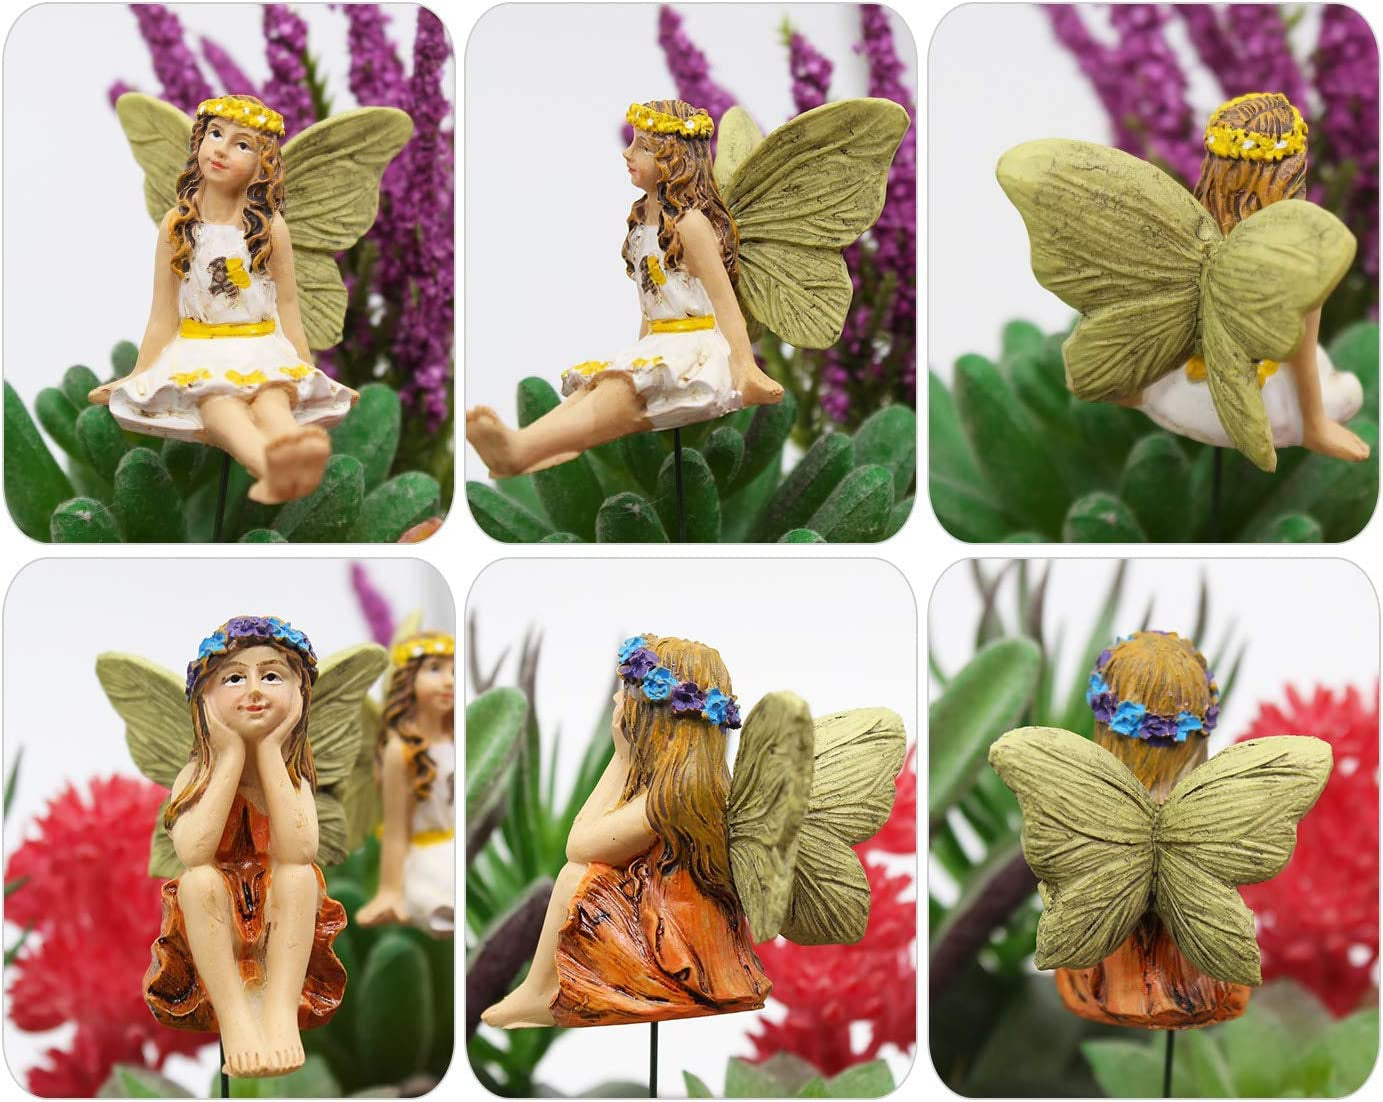 FANWNKI, FANWNKI Fairy Garden Vintage Resin Fairy Figurines for Outdoor Garden Yard Lawn Supplies Home Decor Set of 6